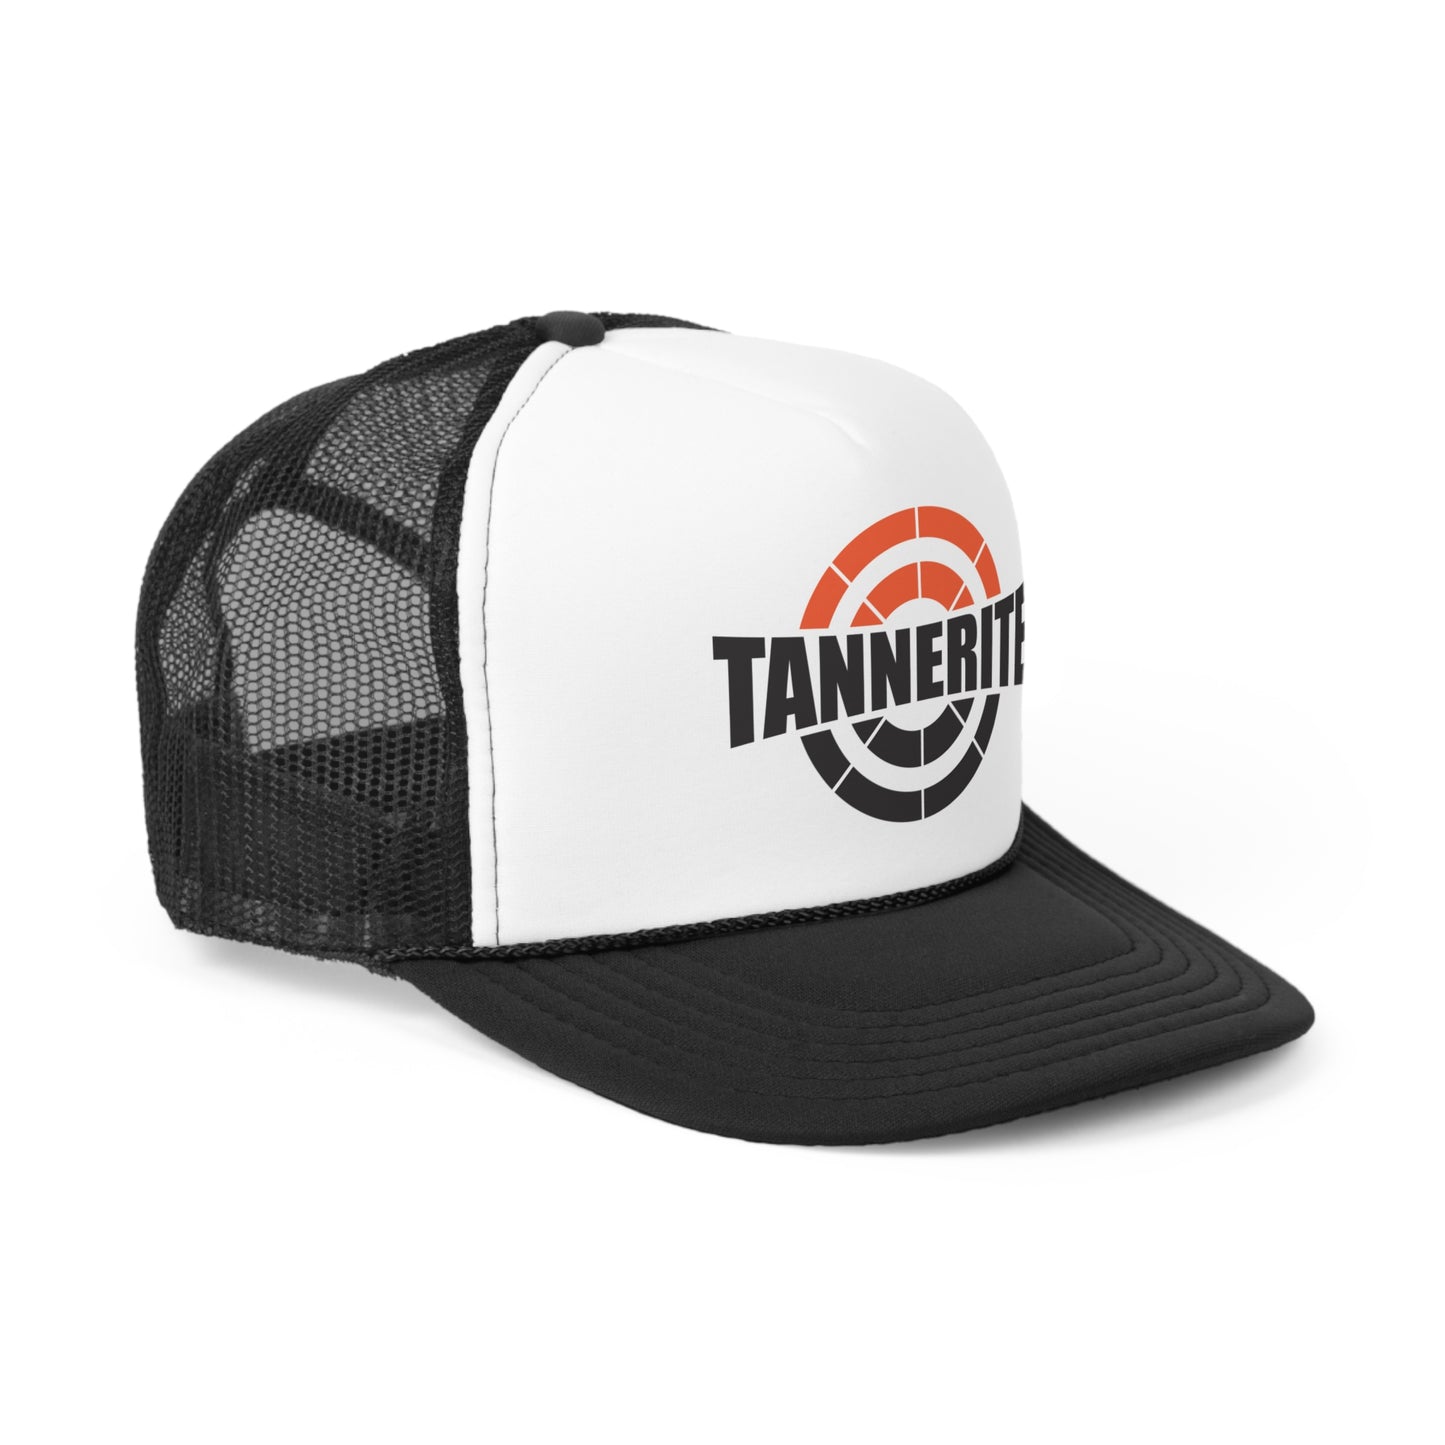 Black and White Trucker Hat - Tannerite